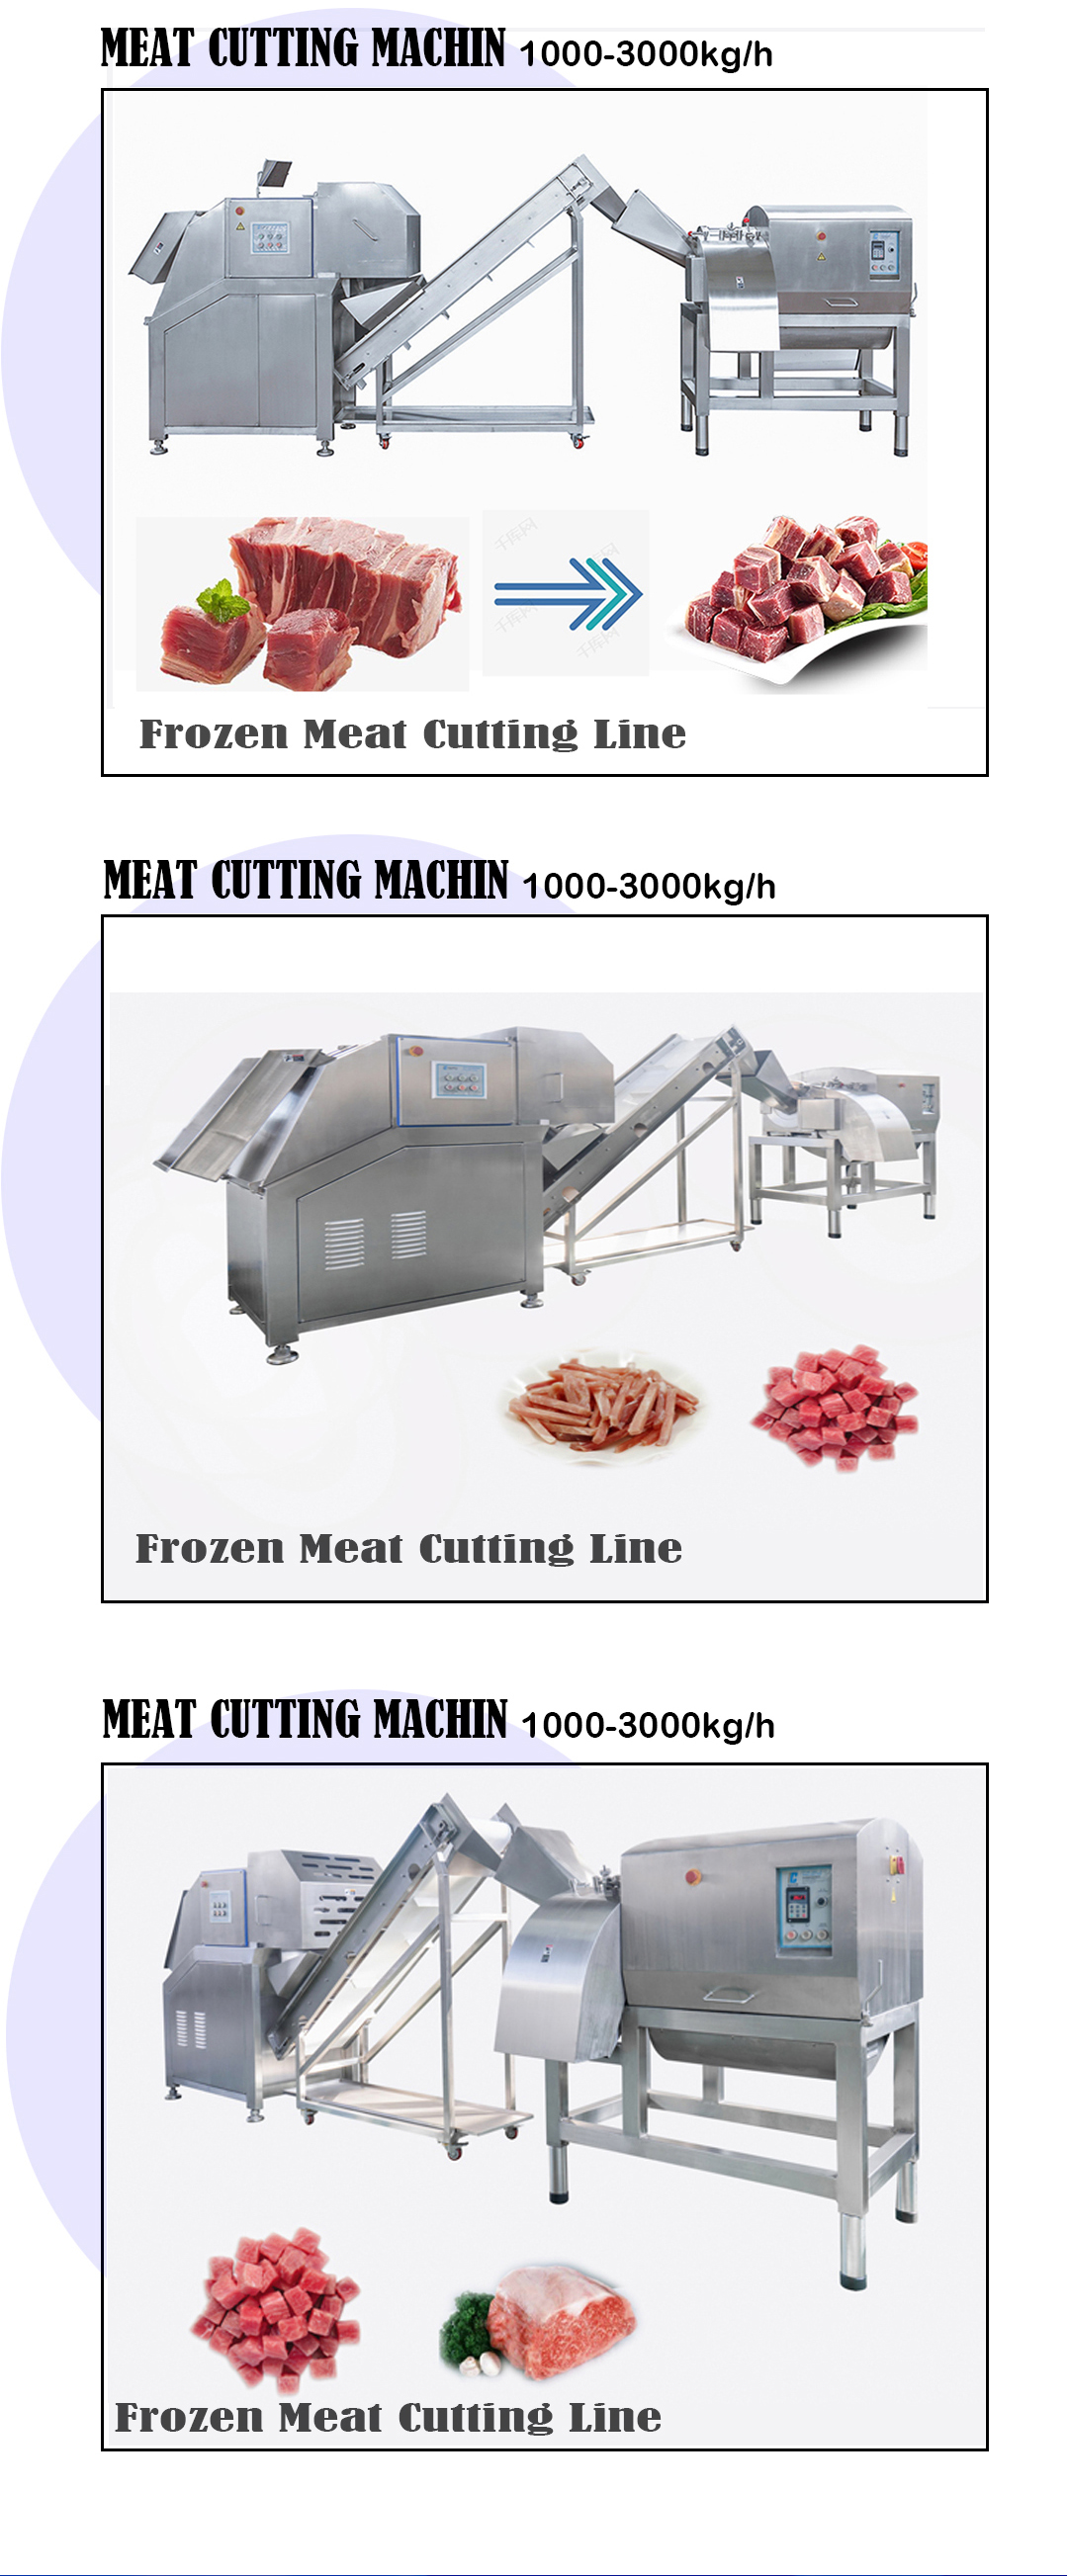 Frozen Meat Cutting Line44444